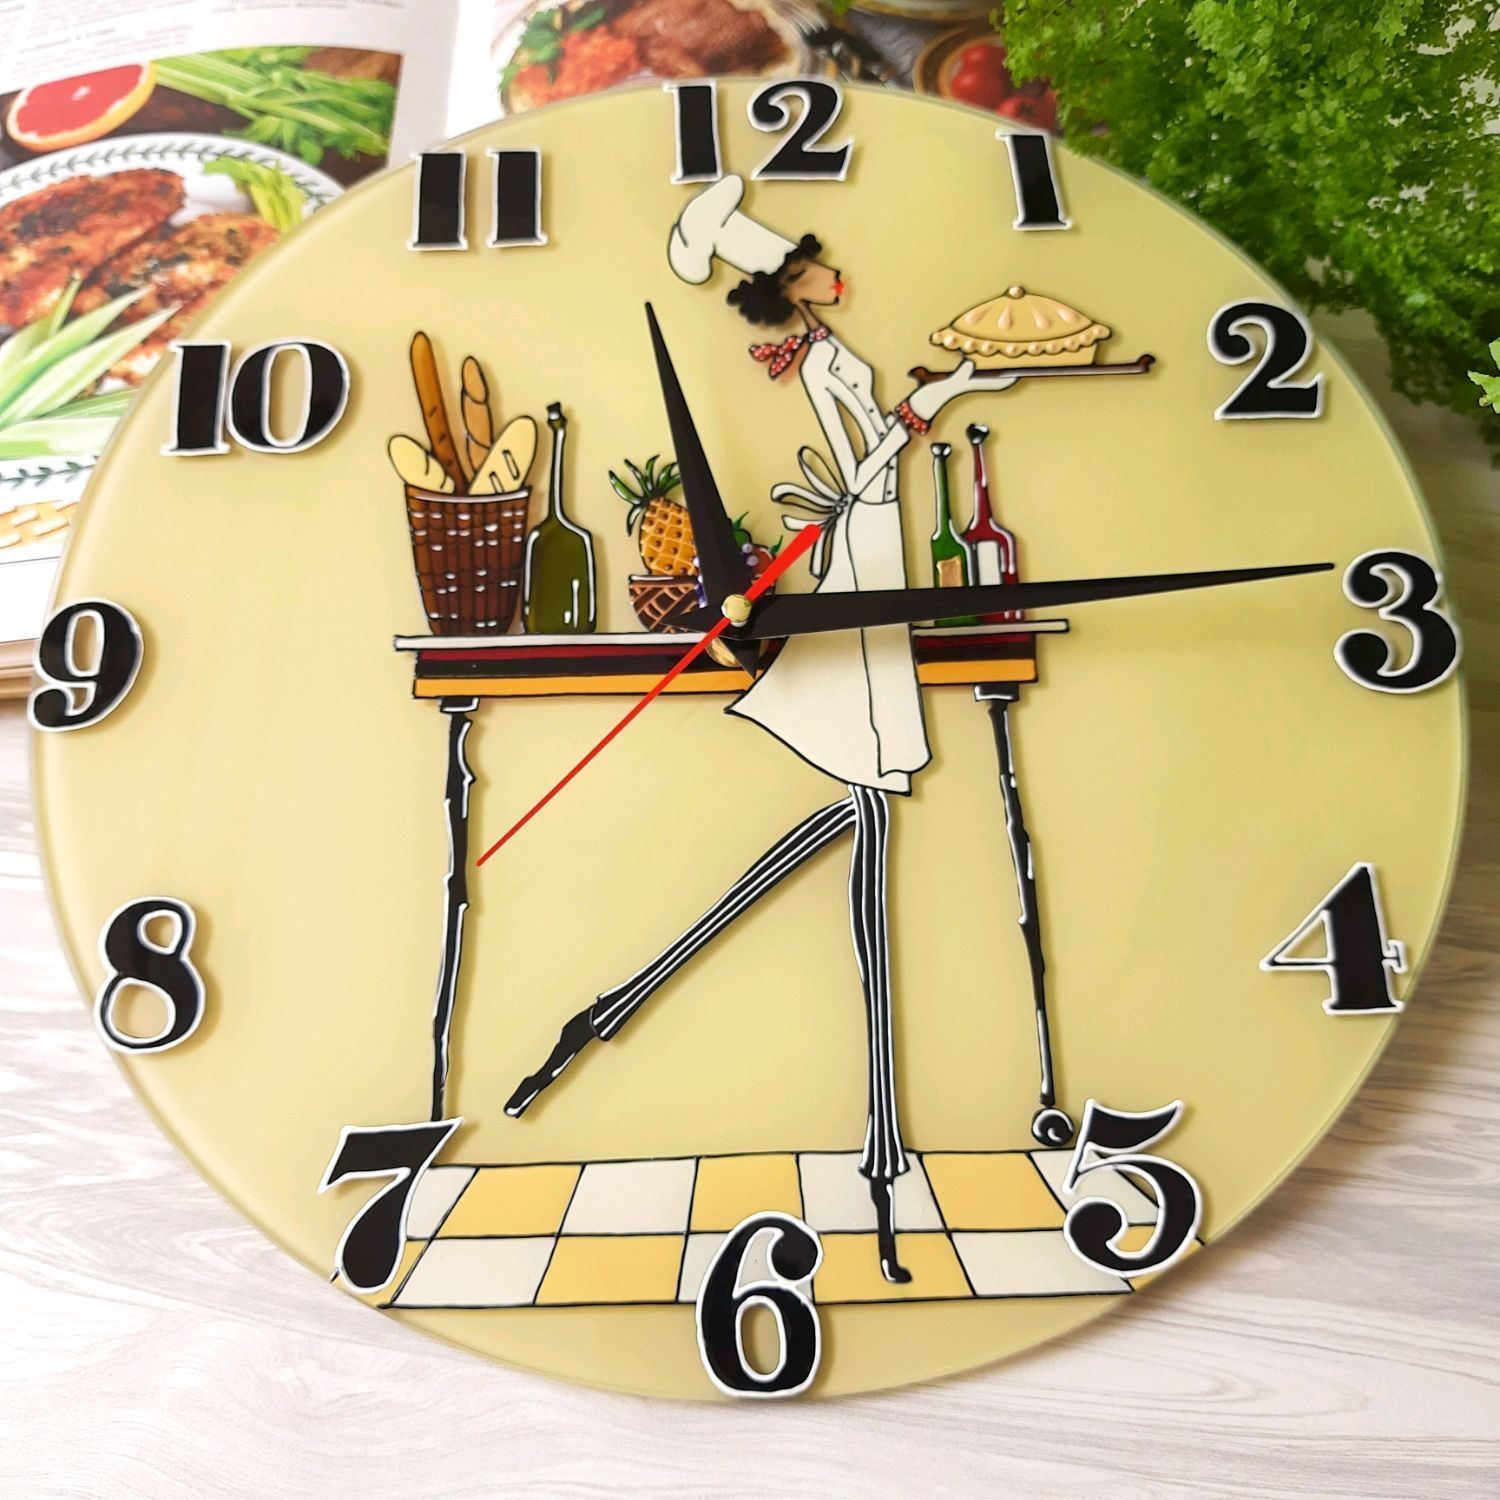 На кухне есть часы. Оригинальные часы на кухню. Часы настенные необычные. Часы кухонный оригинальные. Необычные часы на кухню.